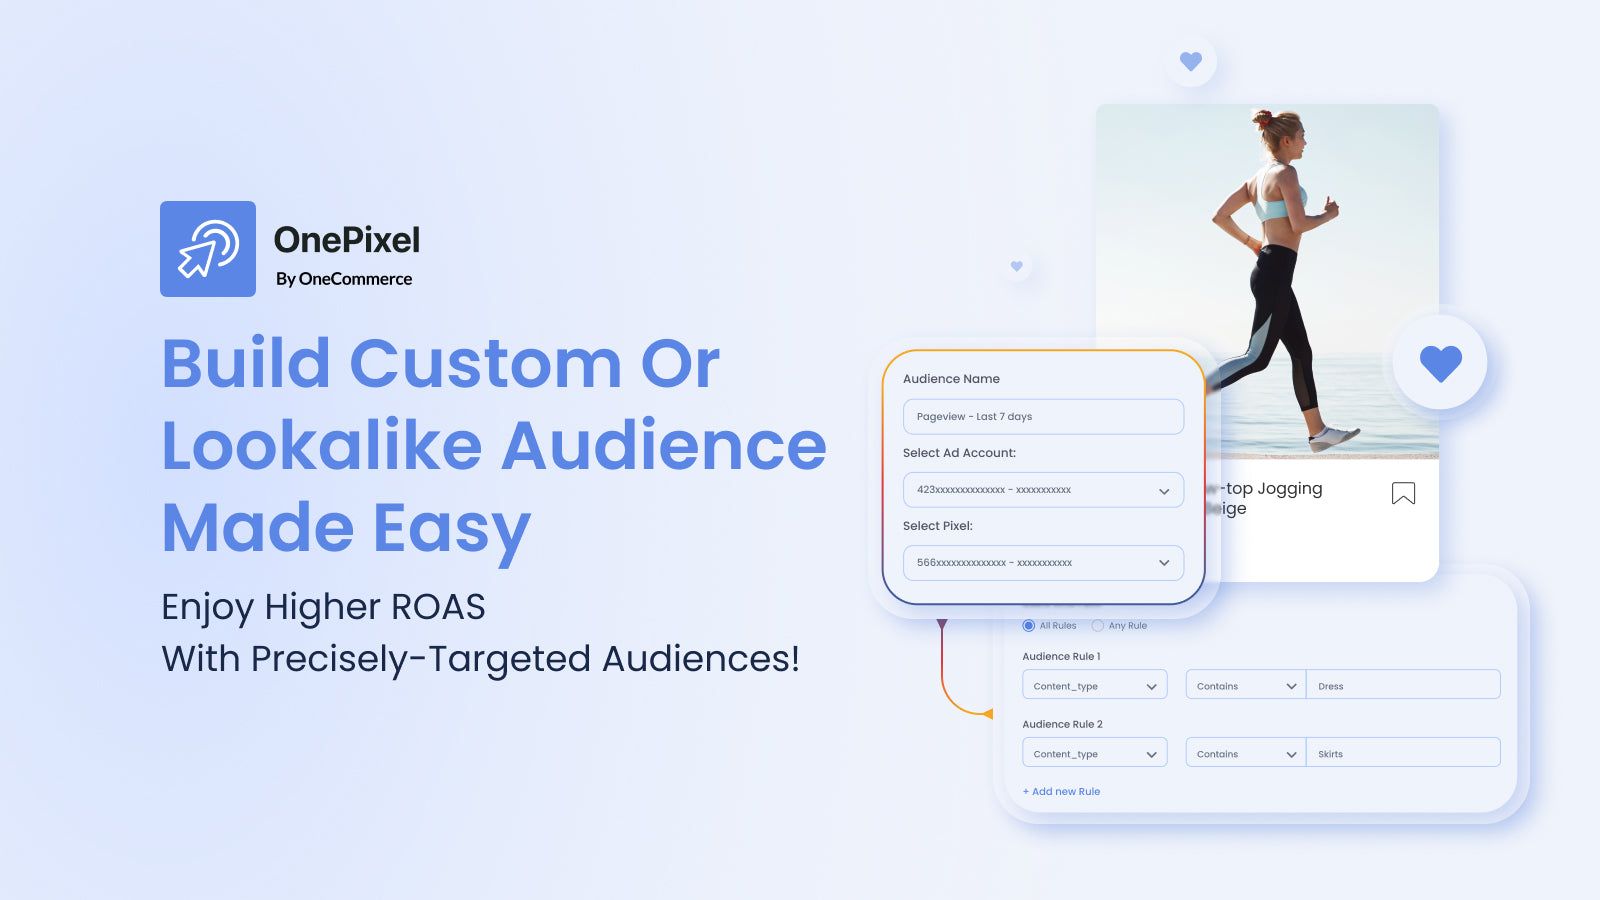 Build custom or lookalike audience made easy